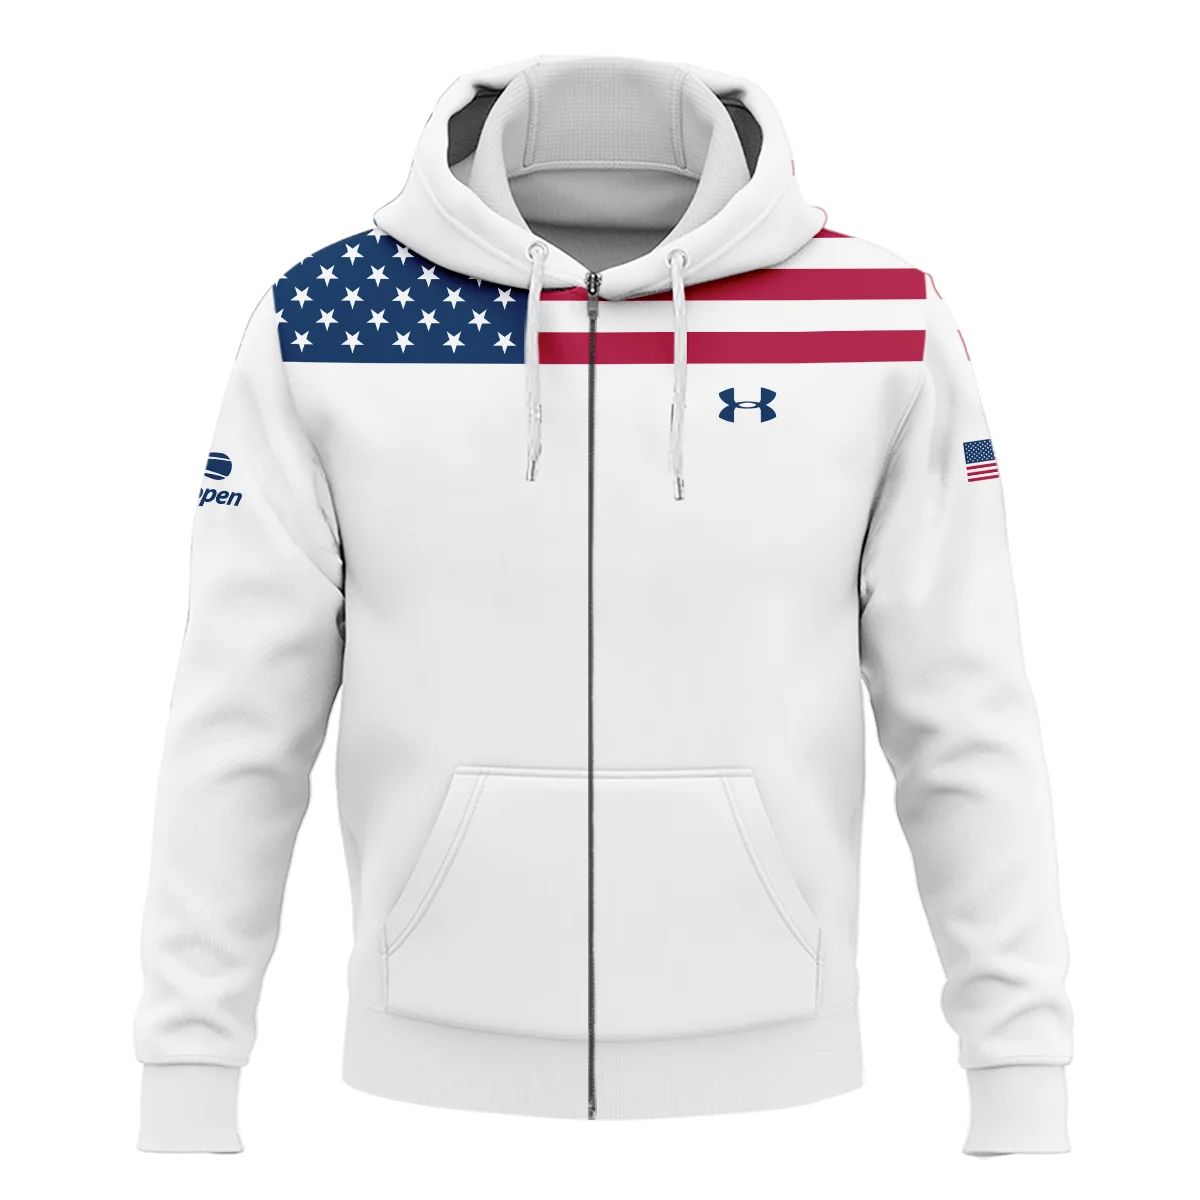 US Open Tennis Champions Under Armour USA Flag White Zipper Hoodie Shirt Style Classic Zipper Hoodie Shirt